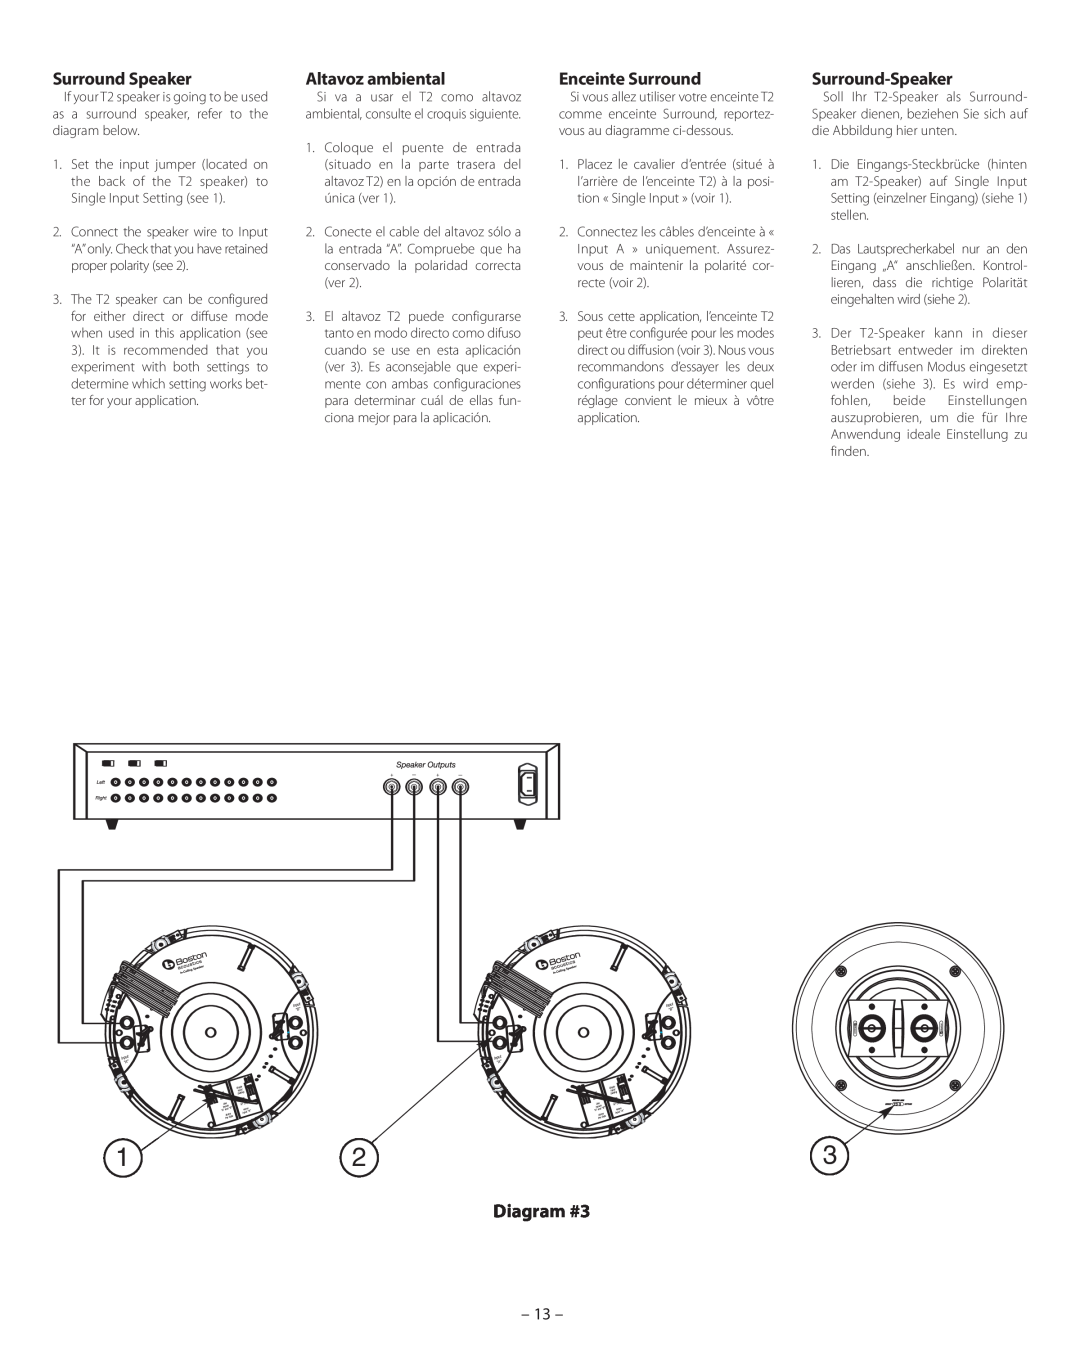 Boston Acoustics VSi 580T2 manual Surround Speaker, Altavoz ambiental, Enceinte Surround, Surround-Speaker, Diagram #3 